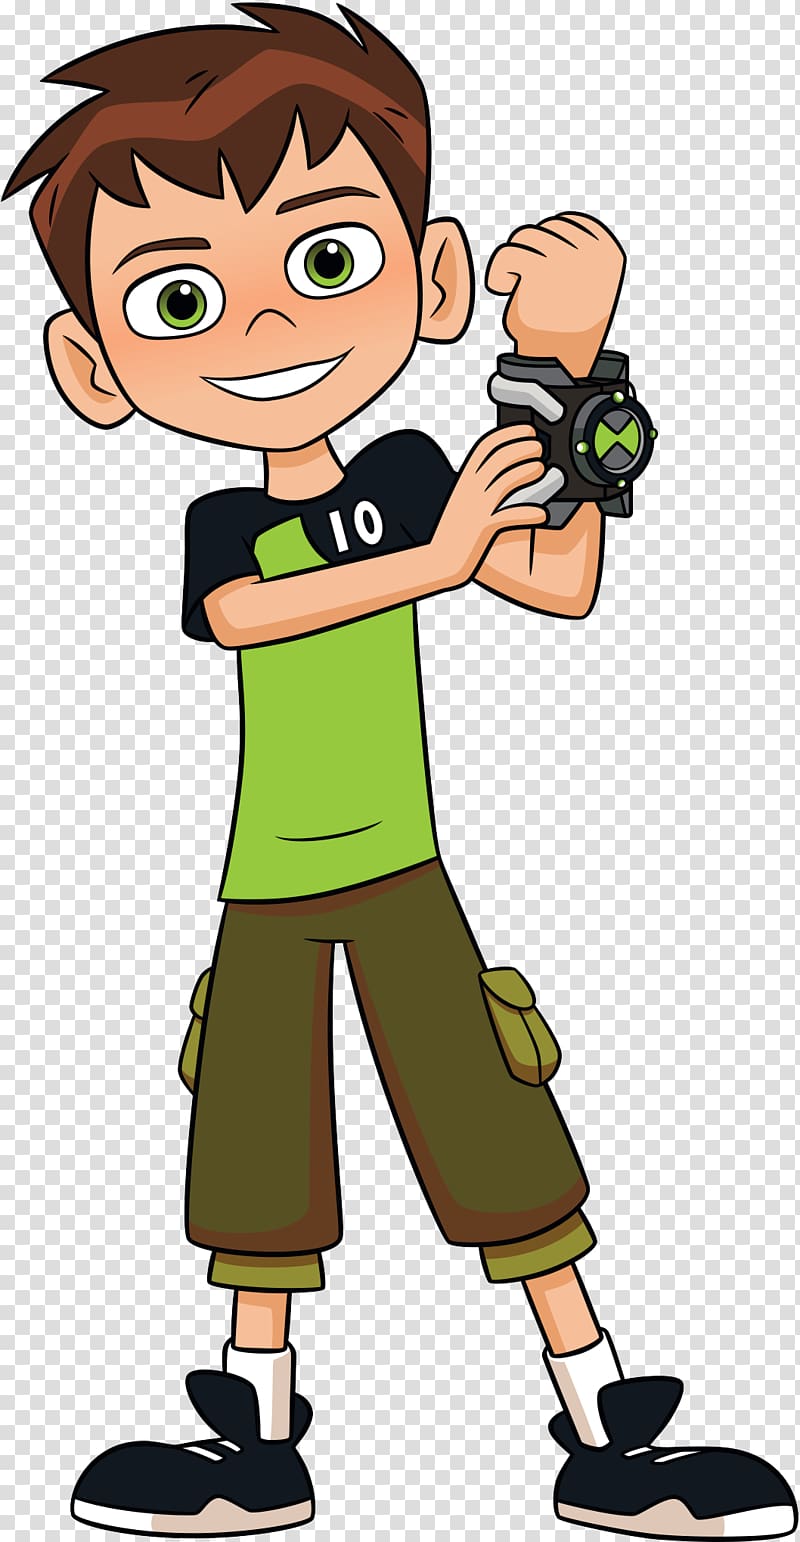 Vilgax Ben 10 Cartoon Network Reboot Character, BEN 10 transparent background PNG clipart